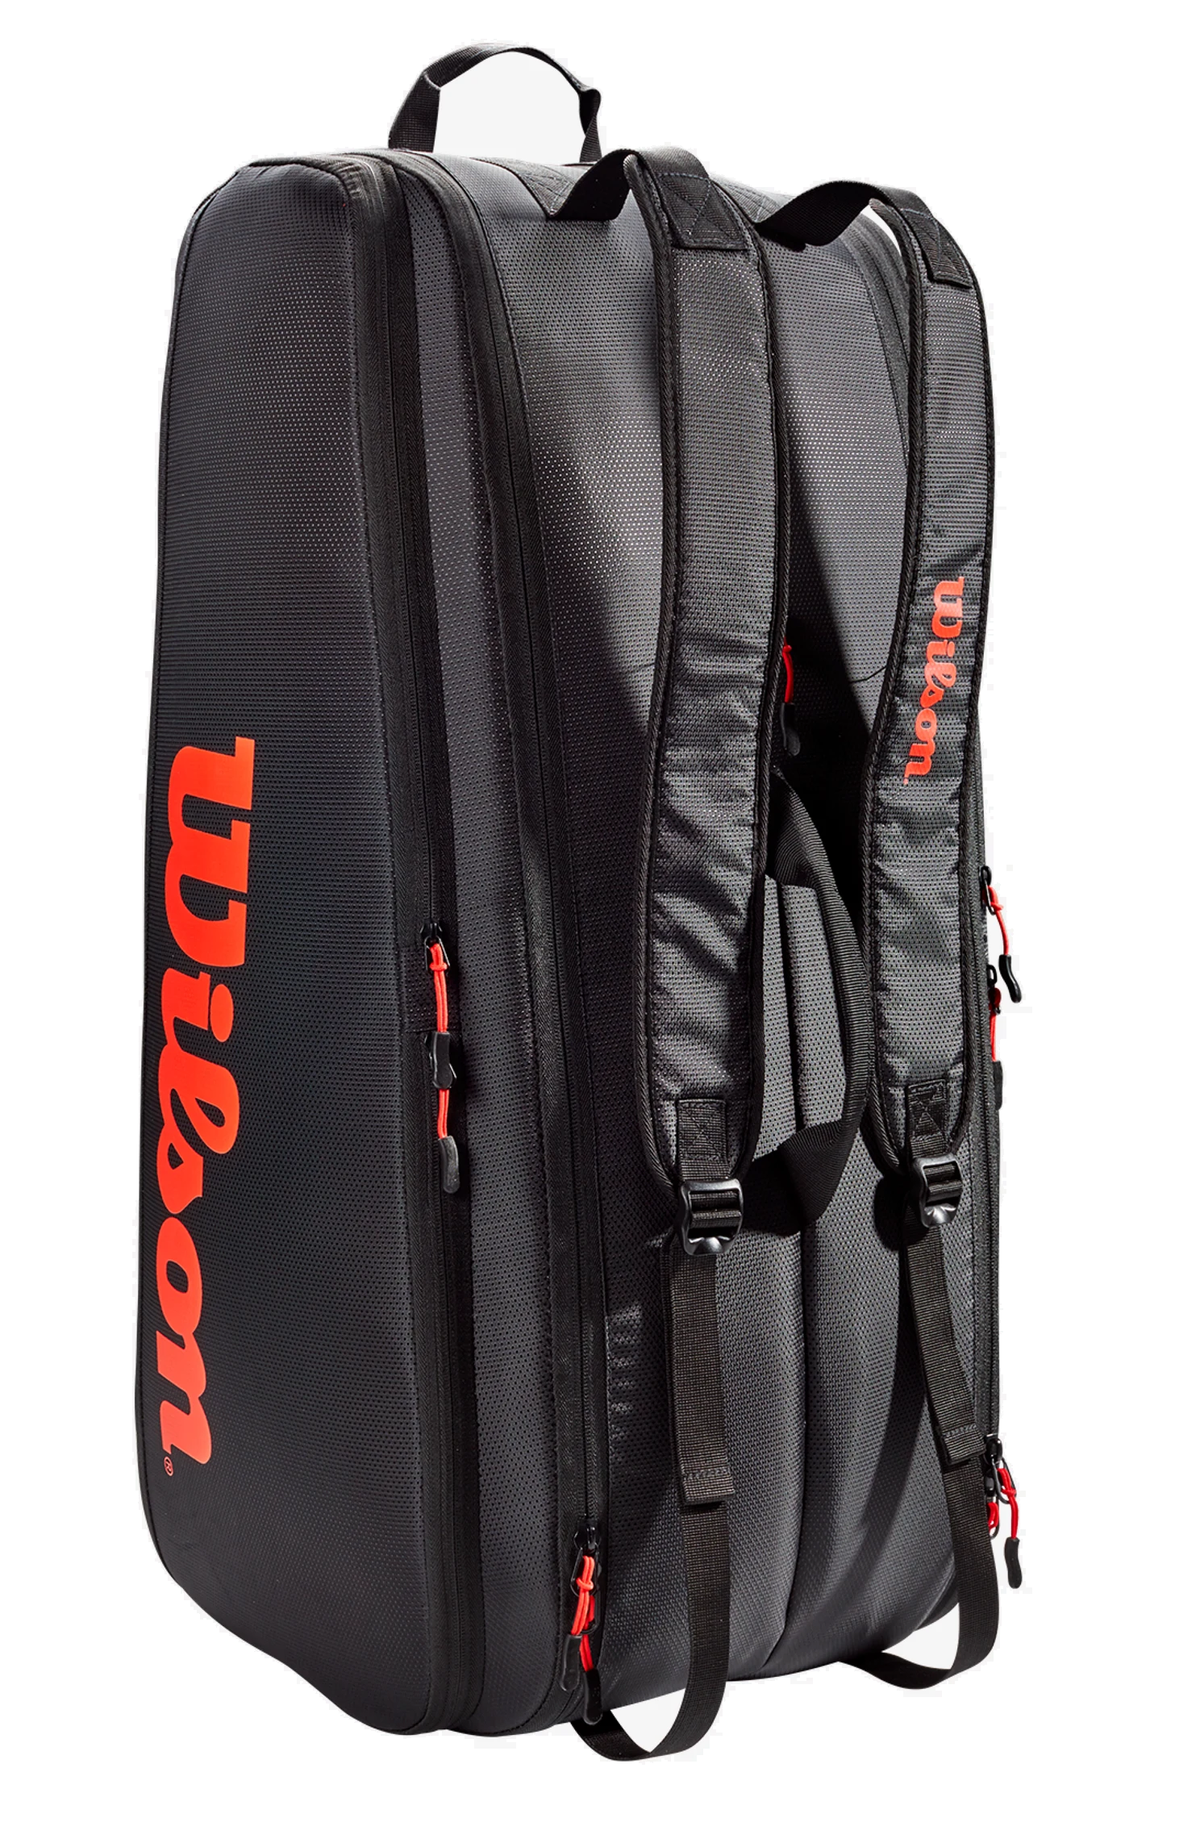 Wilson Tour 12 pack Racket Bag, Red / Black